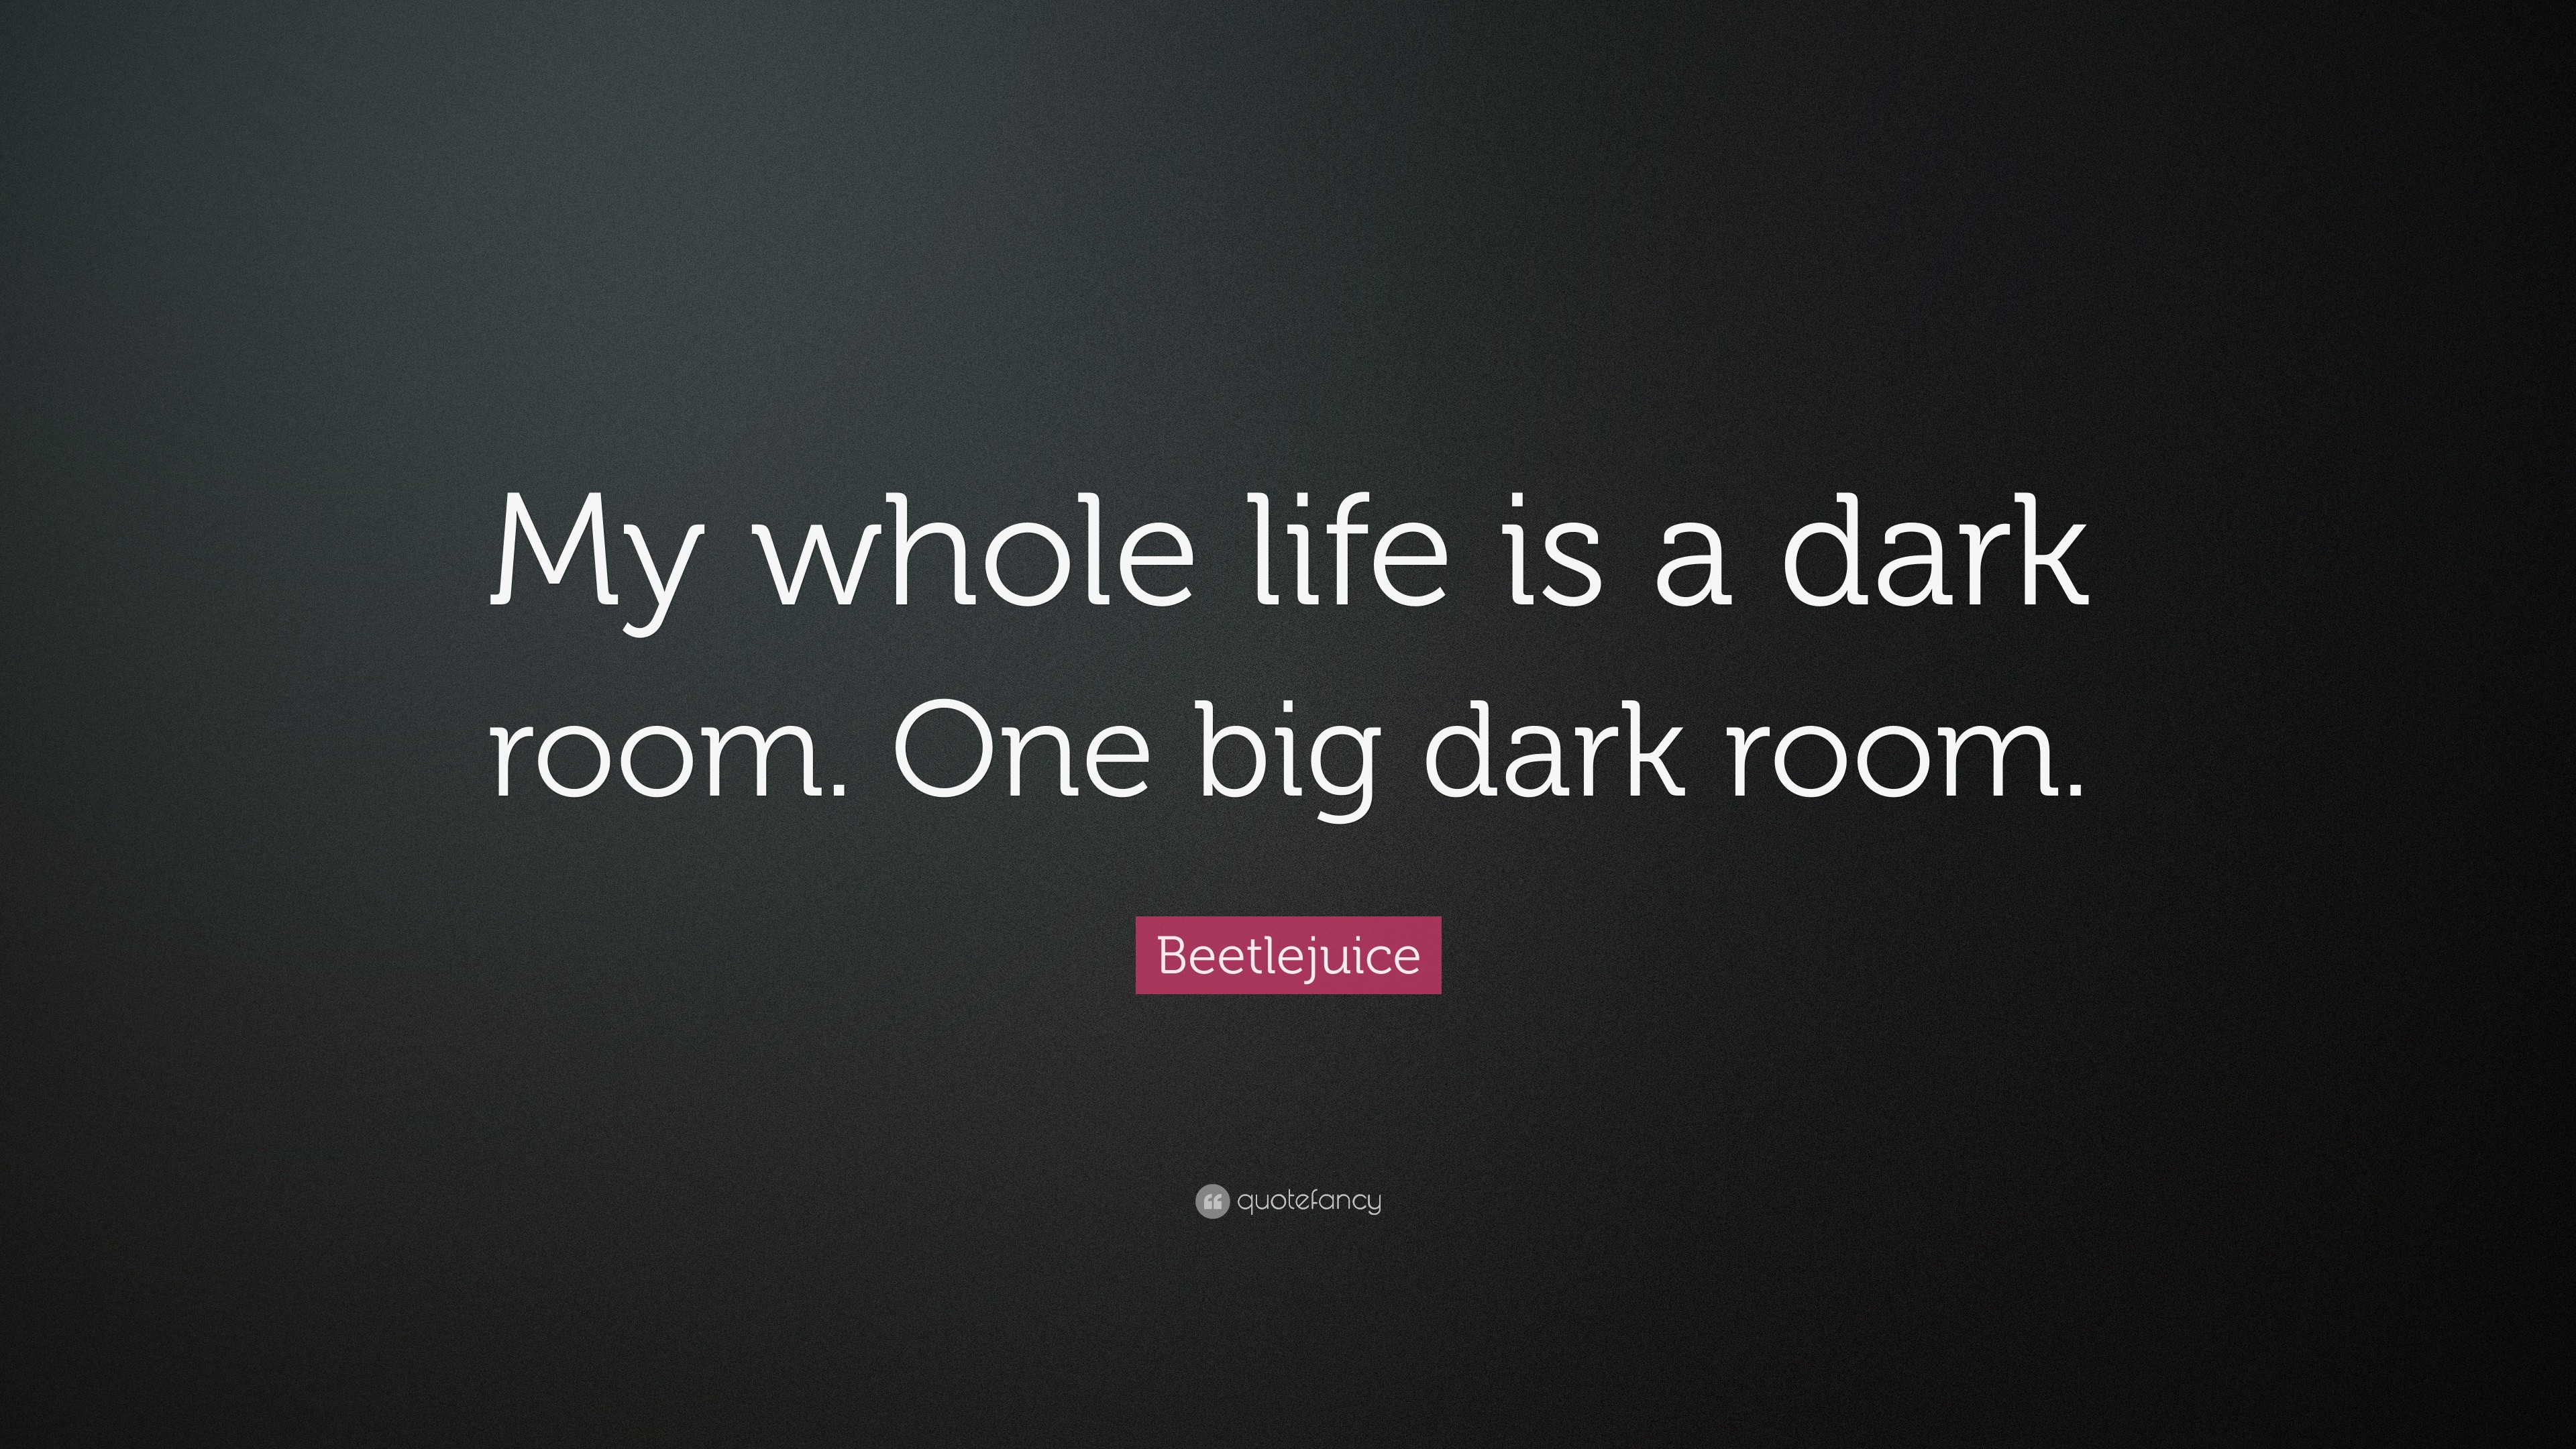 3840x2160 Beetlejuice Quote: “My whole life is a dark room. One big dark room